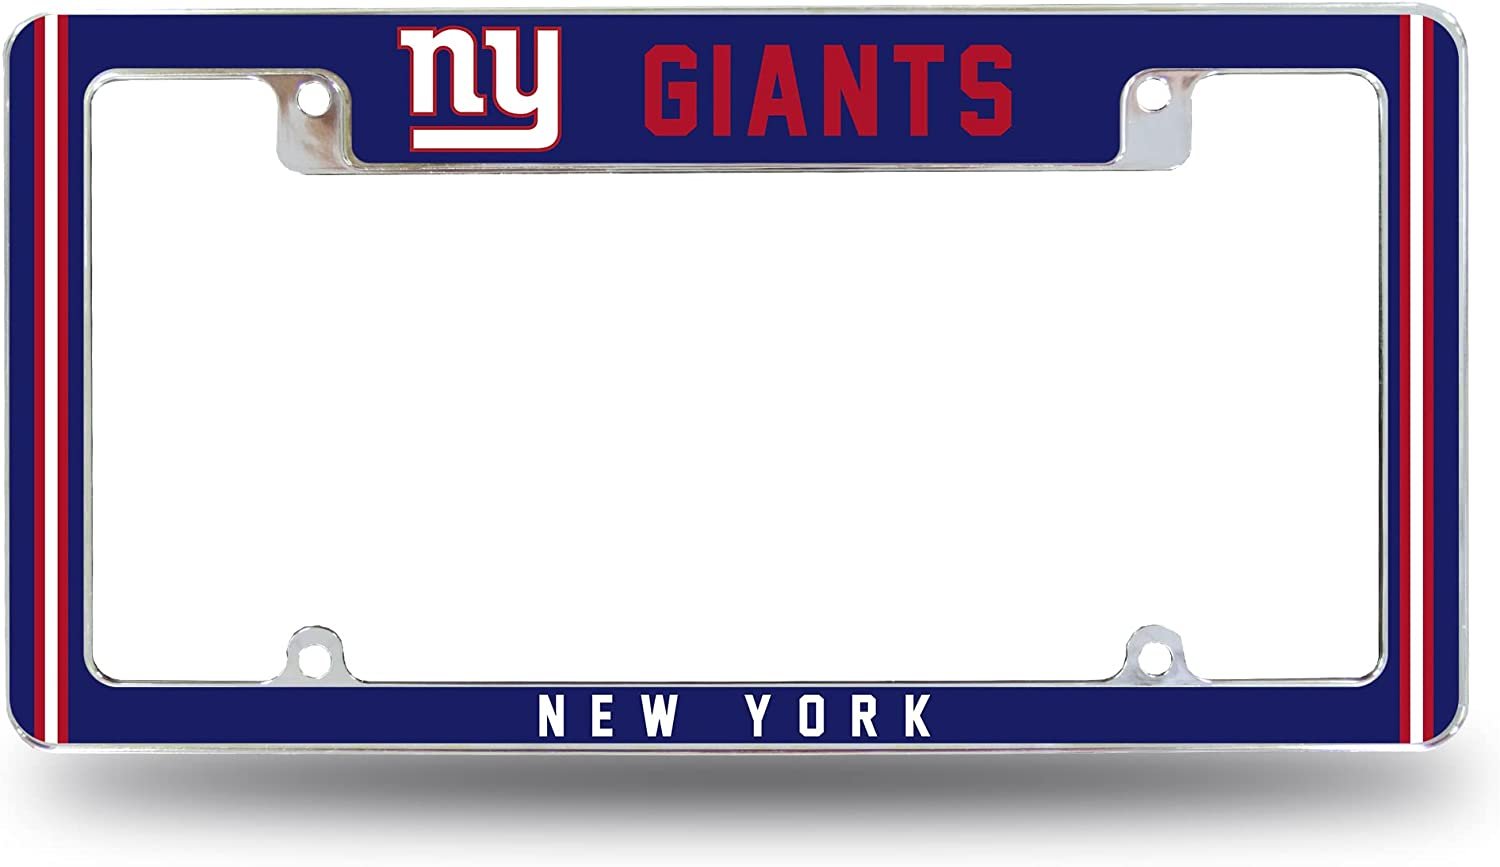 New York Giants Metal License Plate Frame Chrome Tag Cover Alternate Design 6x12 Inch